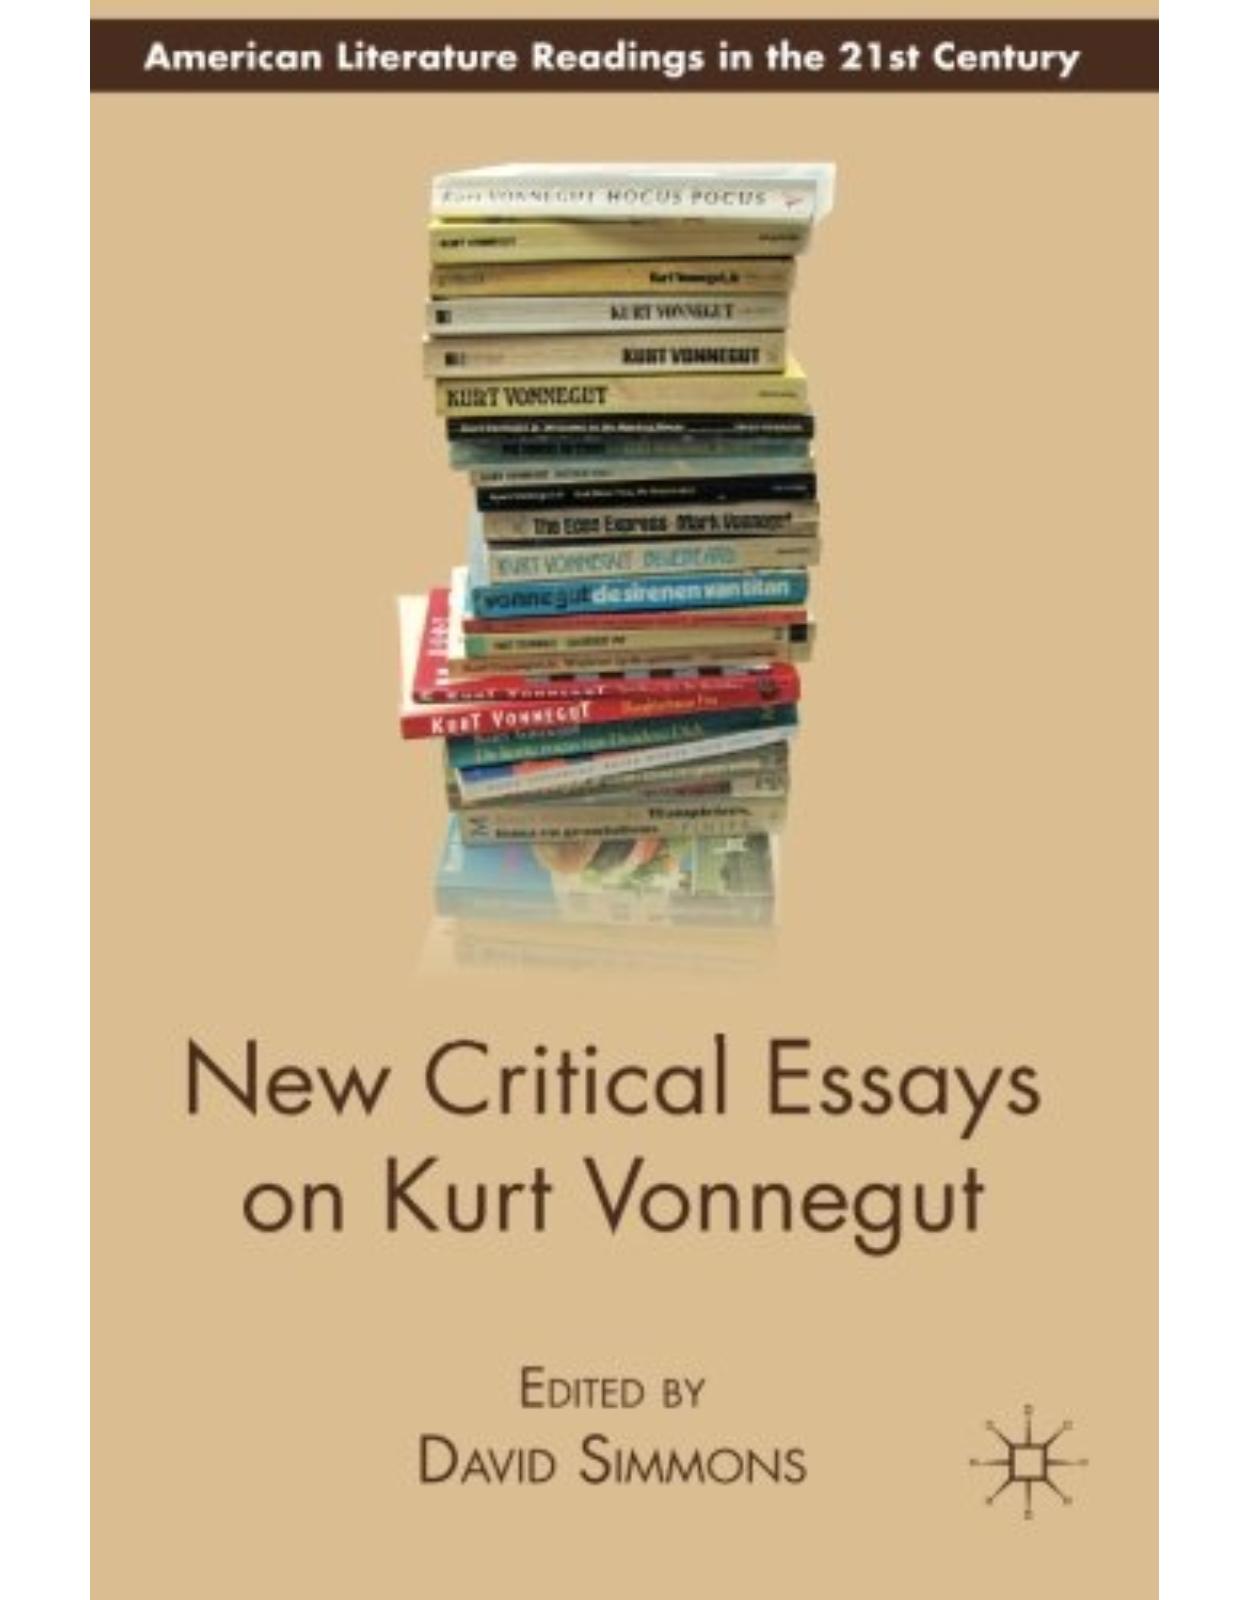 New Critical Essays on Kurt Vonnegut (American Literature Readings in the 21st Century) 